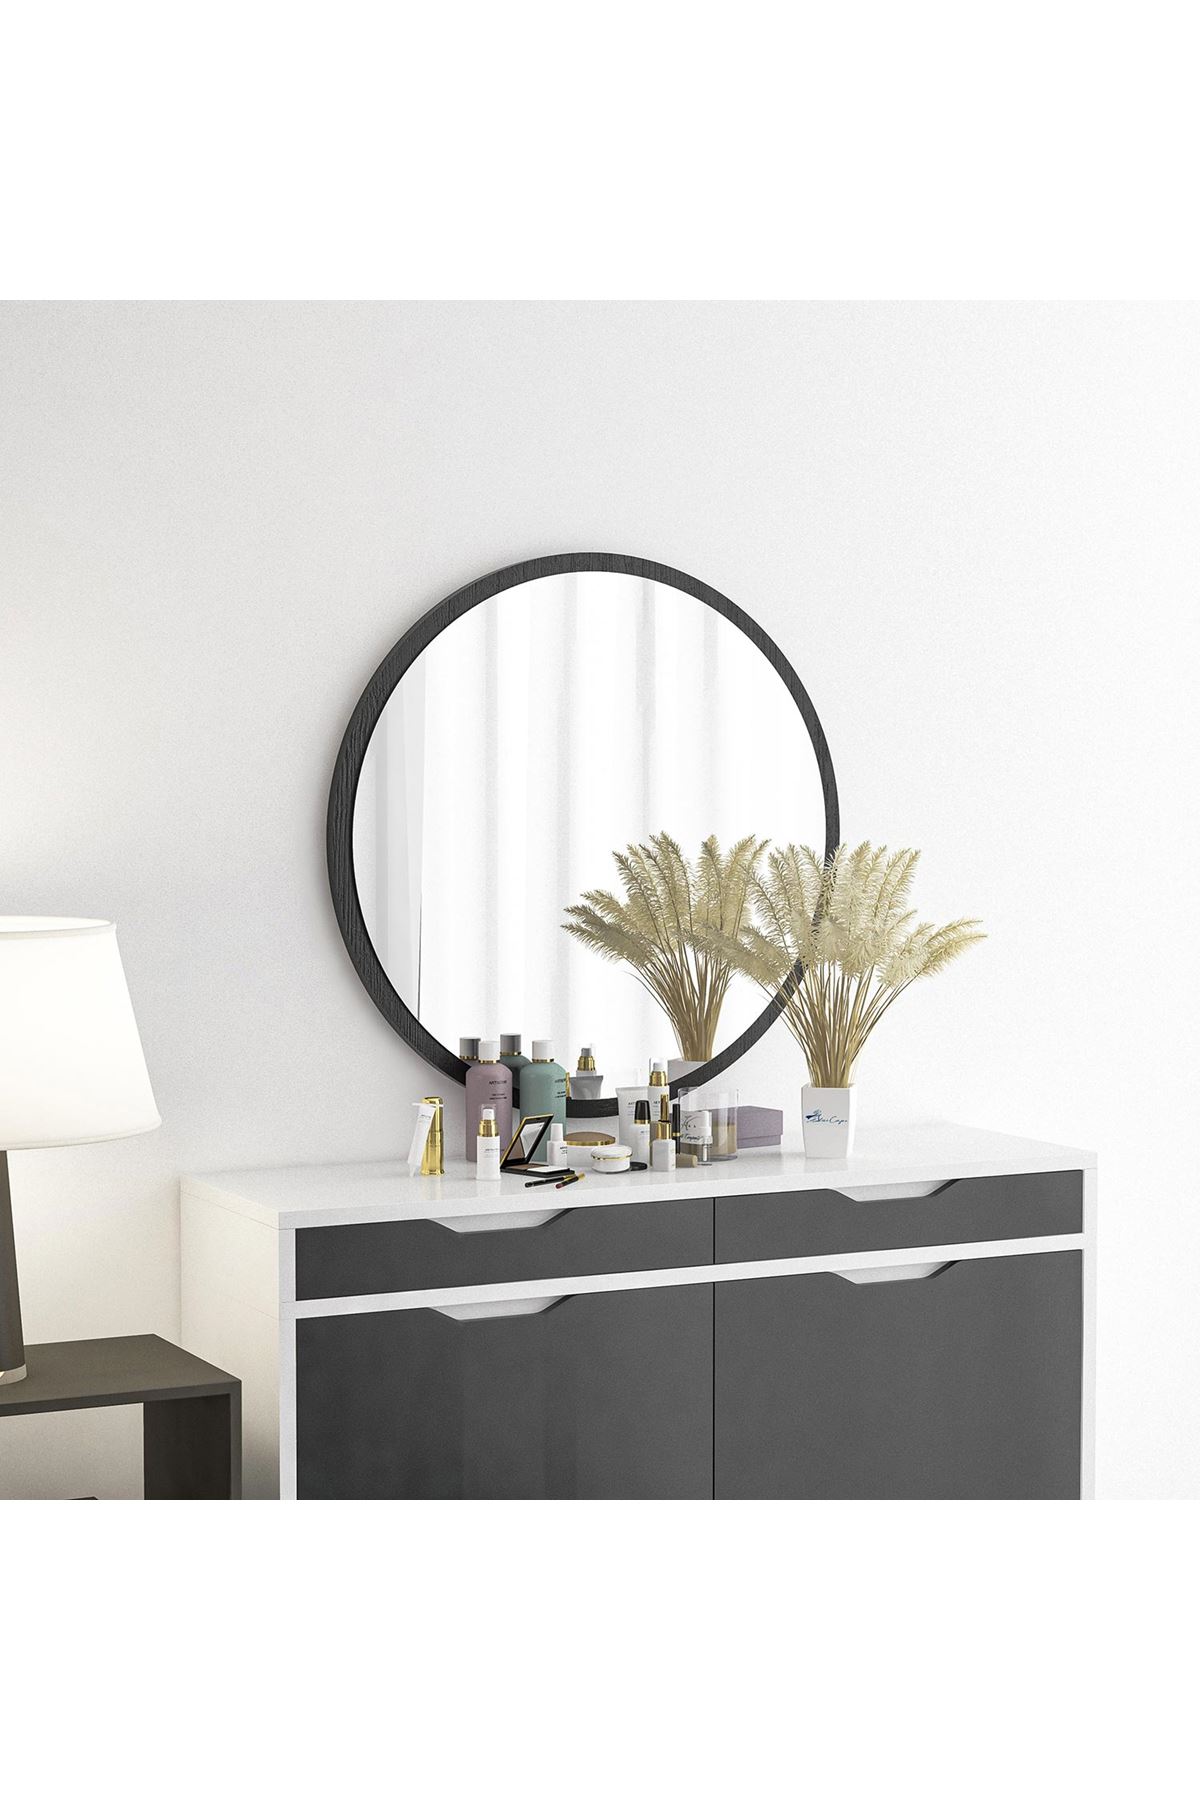 Bofigo 60 Cm Porto Banyo Aynası Dekoratif Lavabo Aynası Yuvarlak Ayna Siyah